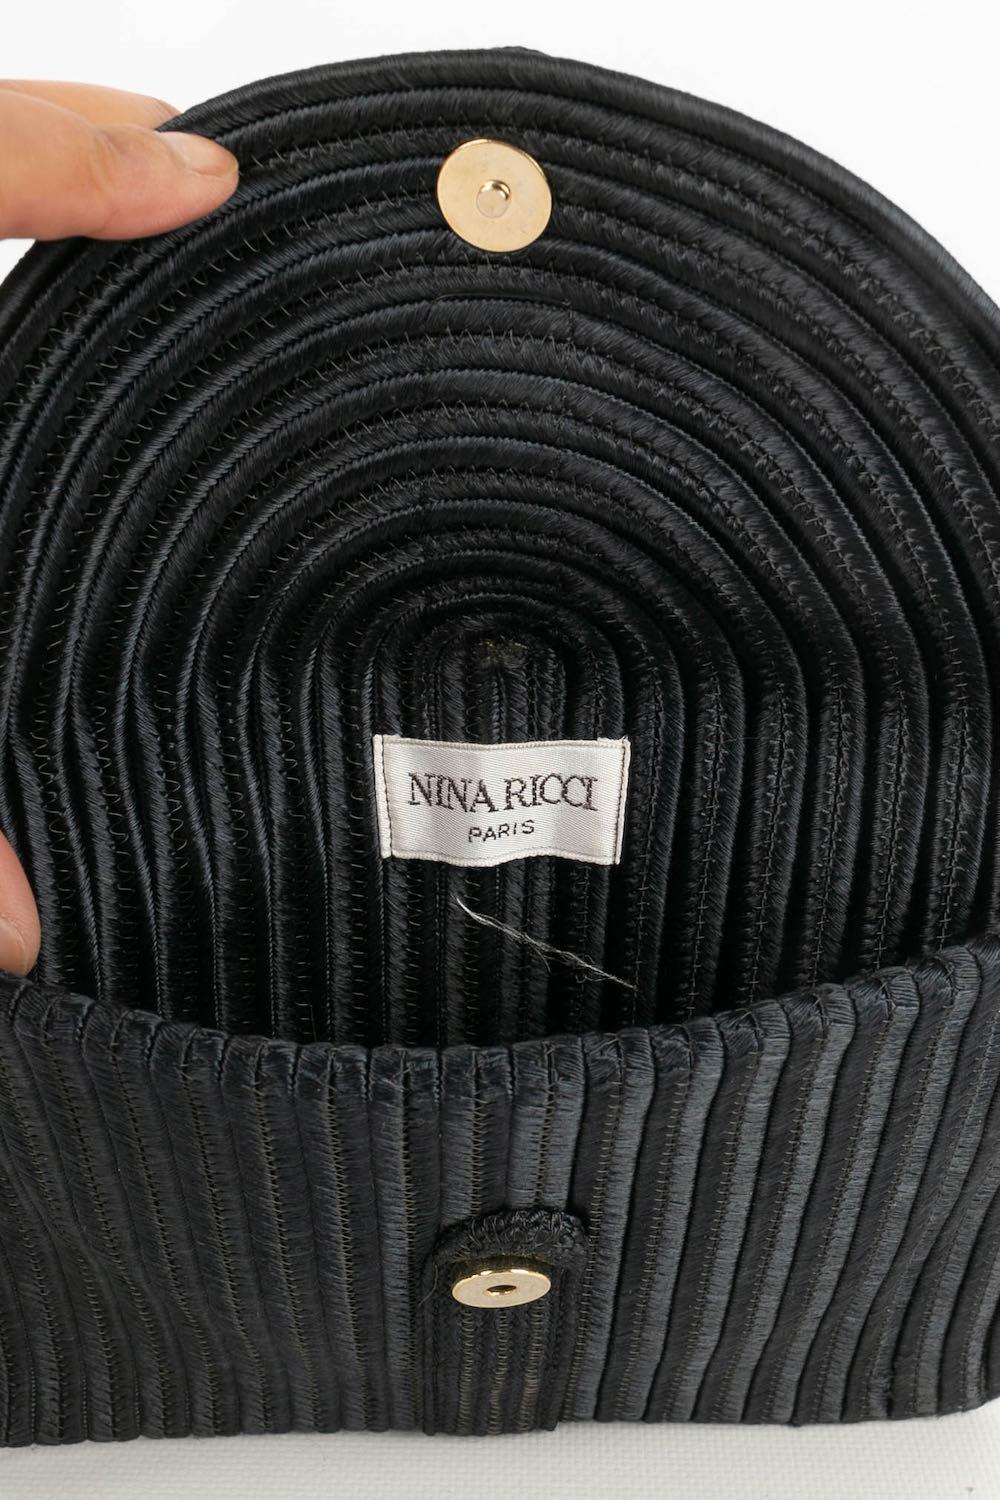 Nina Ricci Black Evening Bag For Sale 2